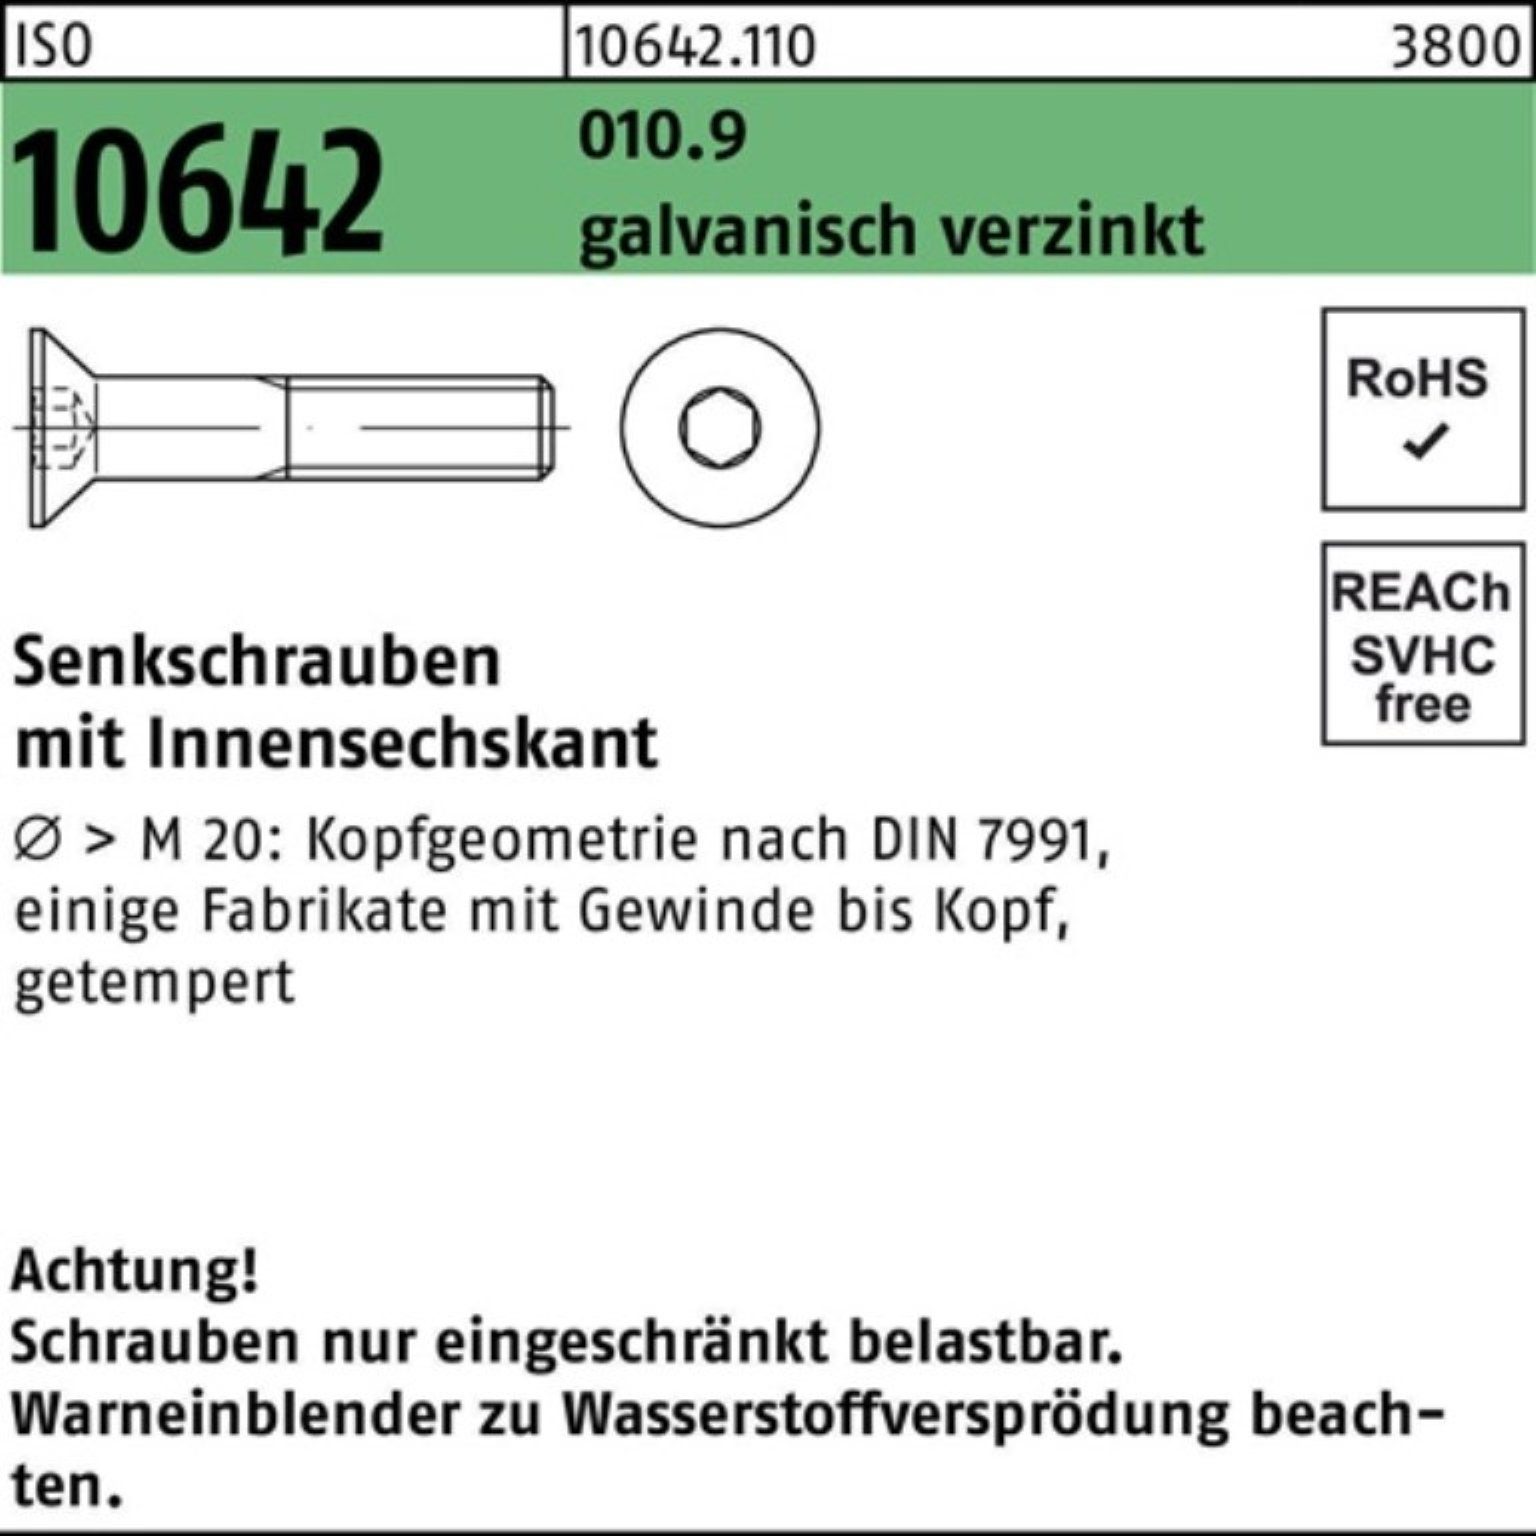 Reyher Senkschraube 200er Pack Senkschraube ISO 10642 Innen-6kt M10x 25 010.9 galv.verz. 2